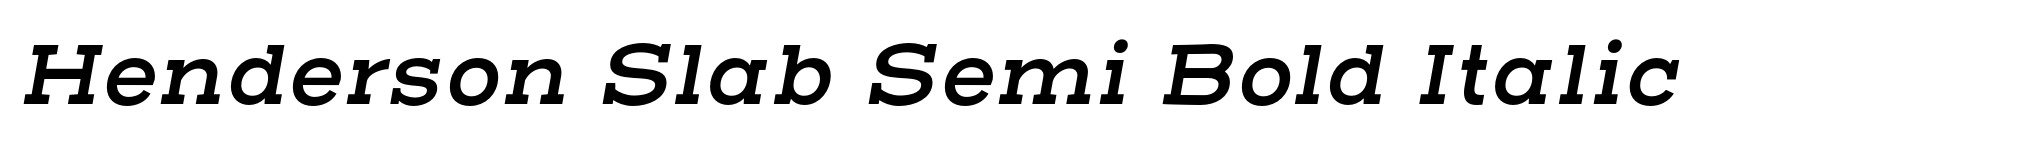 Henderson Slab Semi Bold Italic image